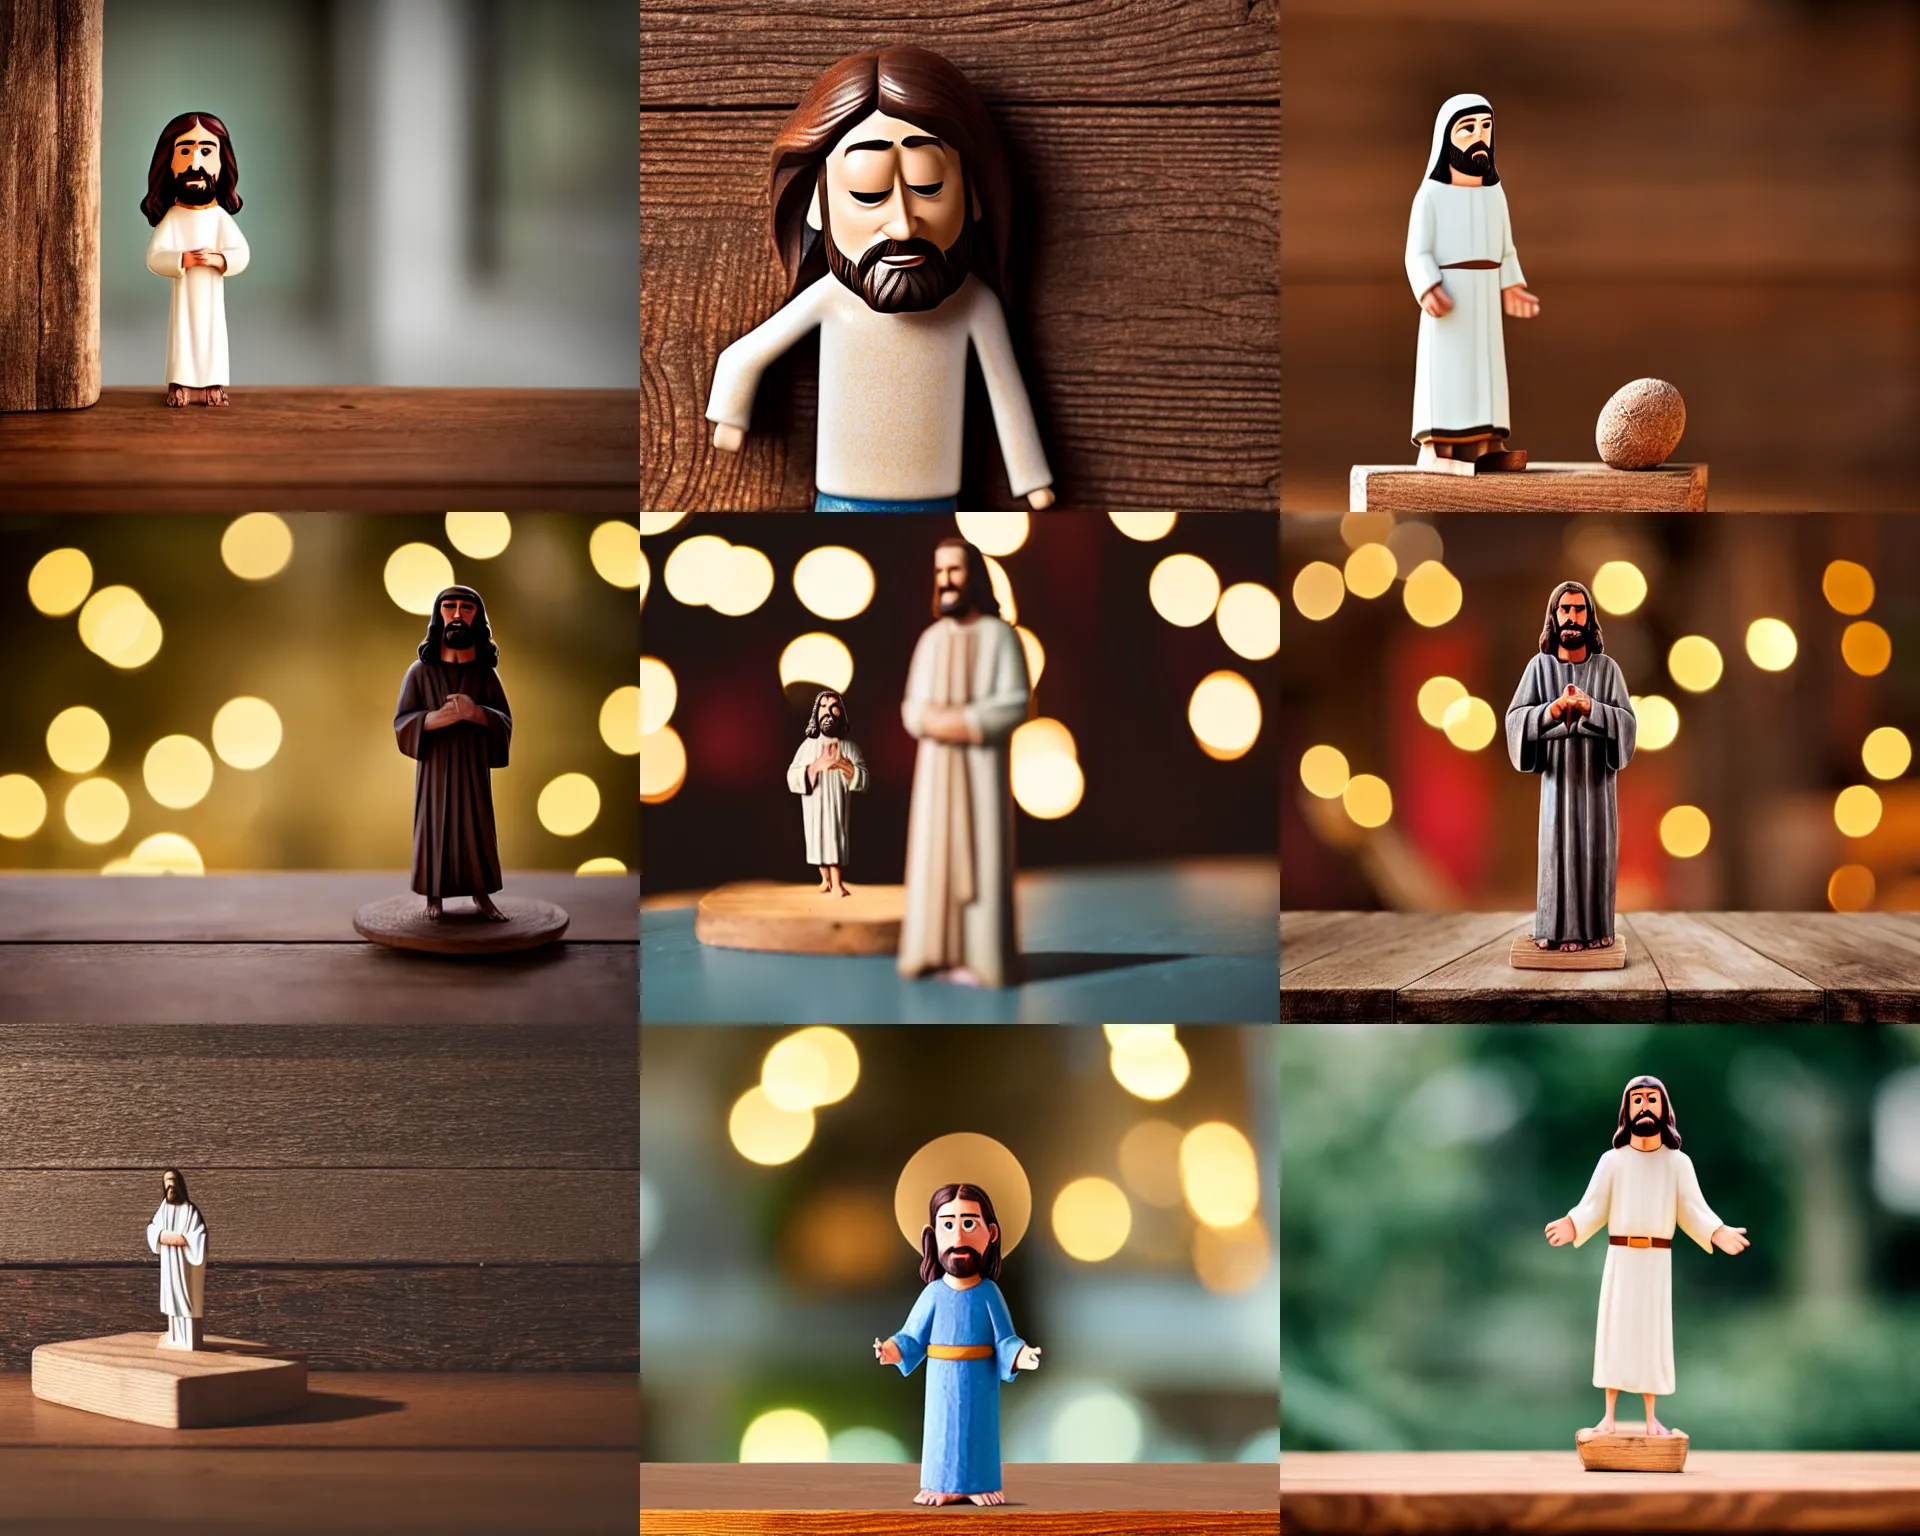 Prompt: jesus figurine by pixar sad bokeh on wooden table.